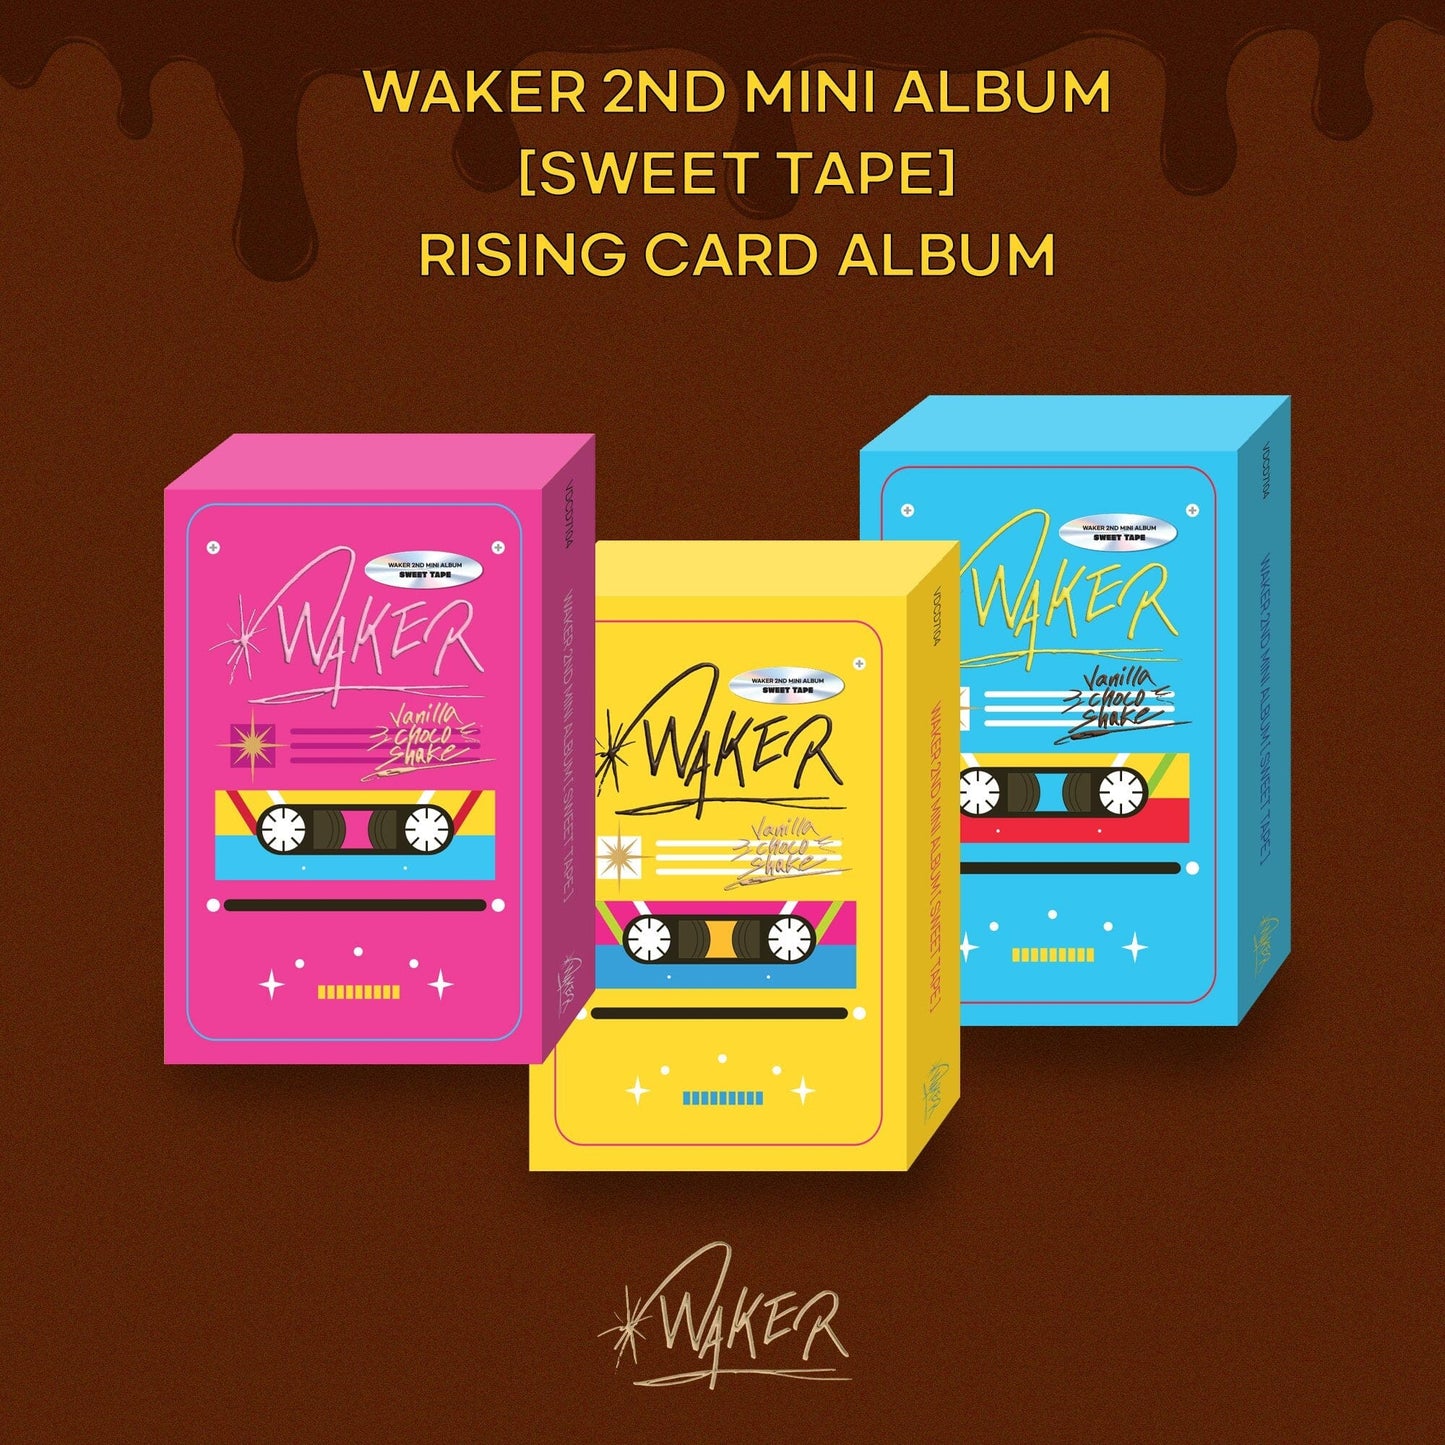 [Pre-Order] WAKER - 2nd Mini Album Sweet Tape [RISING CARD ALBUM]